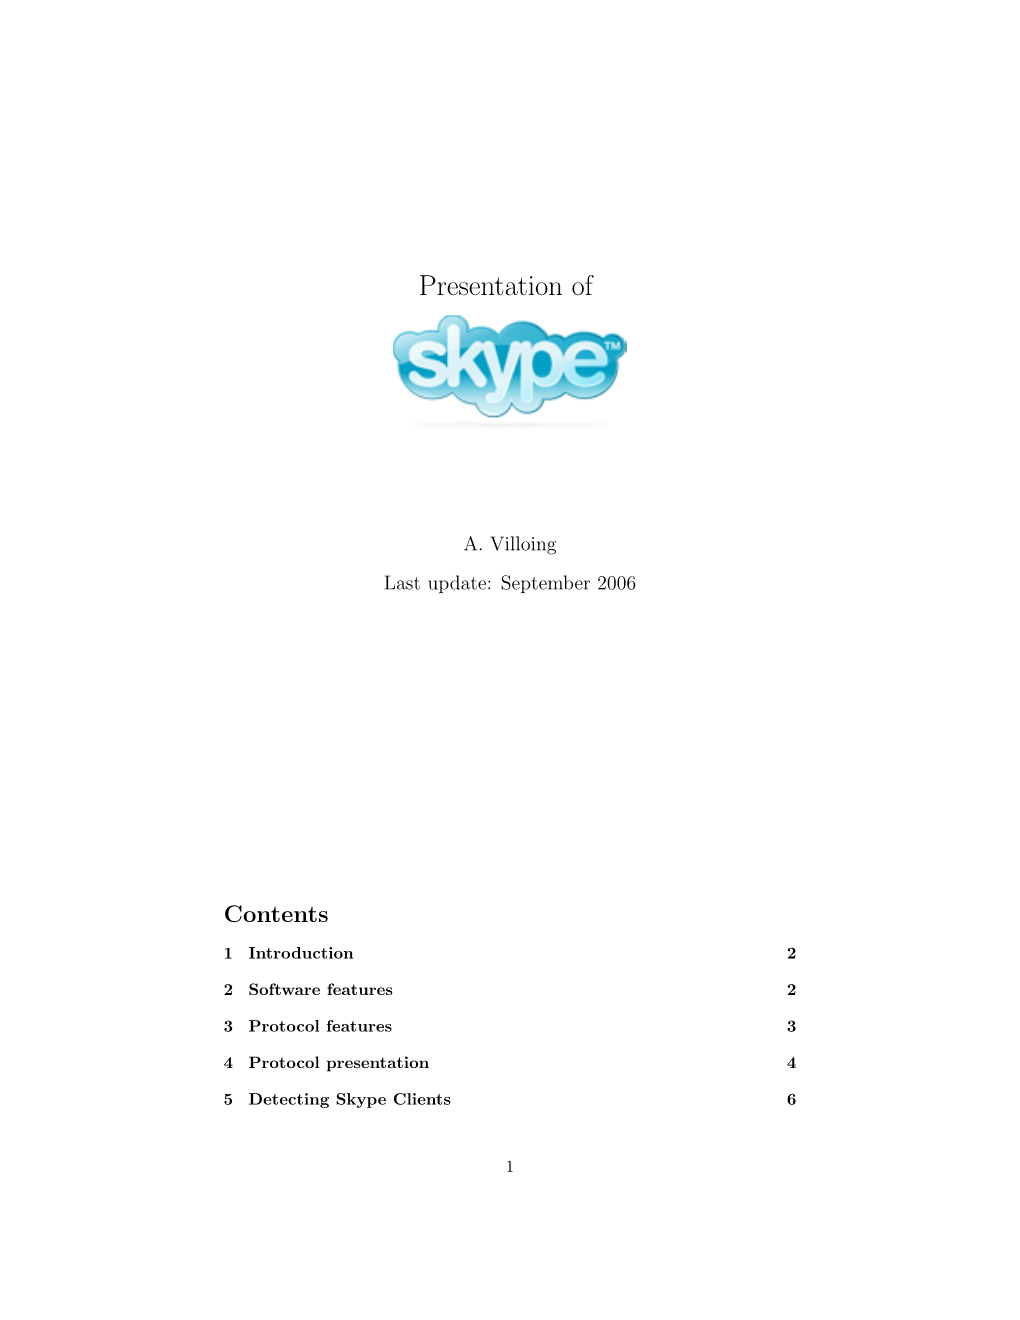 Presentation of Skype